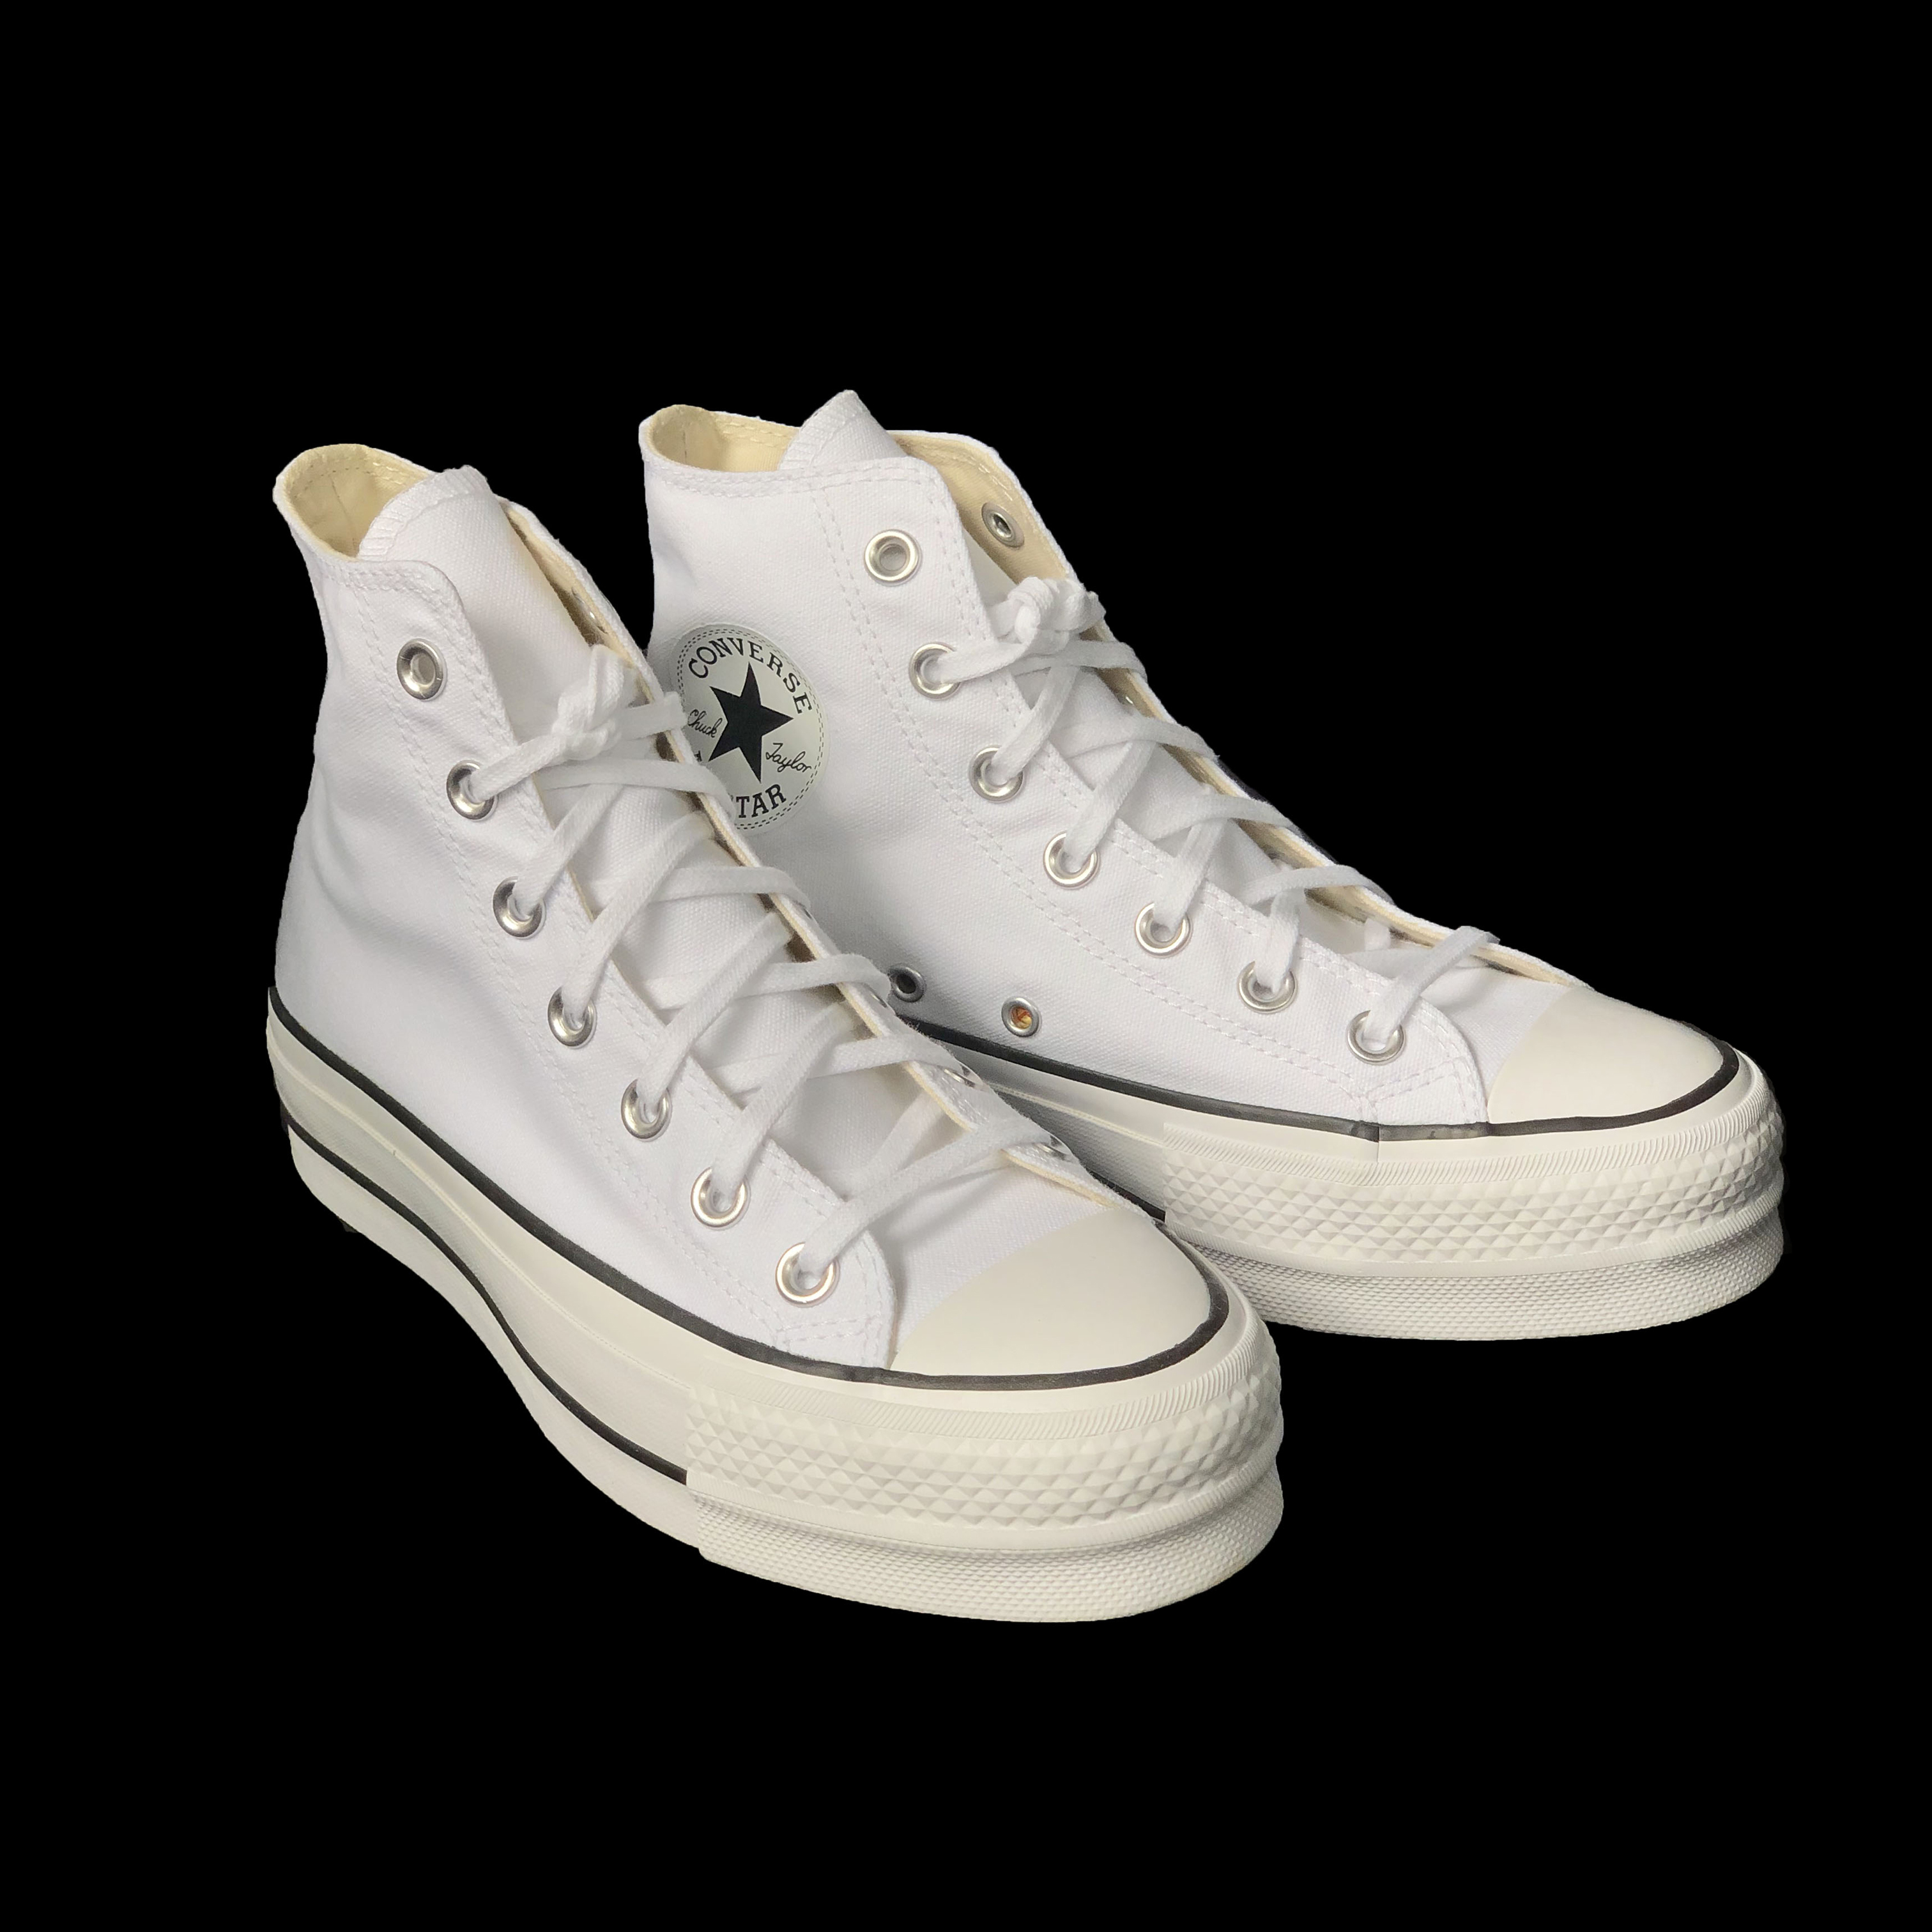 ConverseConverse สีขาวหนา soled รองเท้าผู้หญิงสูงต่ำรองเท้าผ้าใบ561676C 560846C